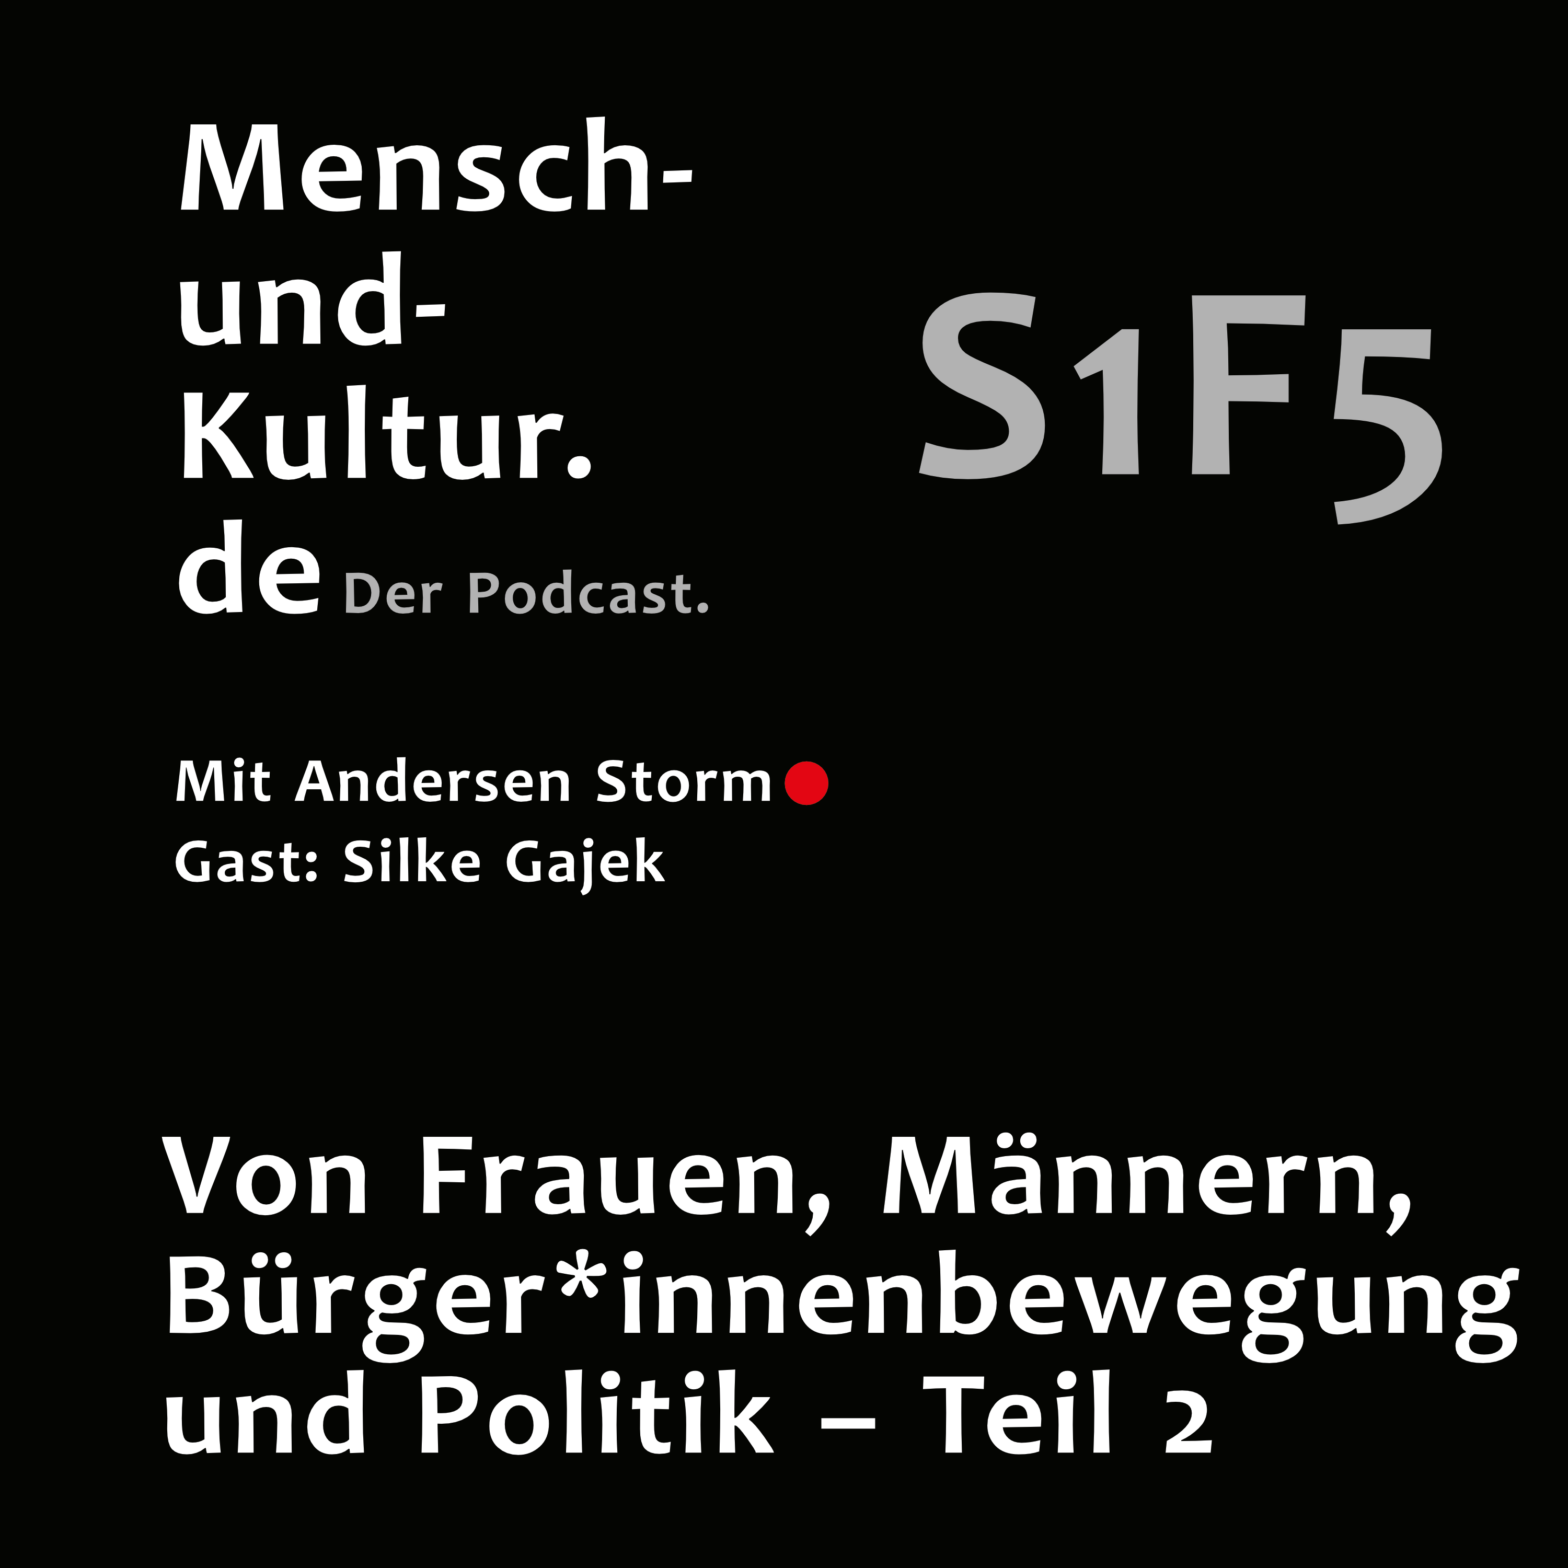 Podcastepisode S1F5, Mensch-und-Kultur.de - der Podcast